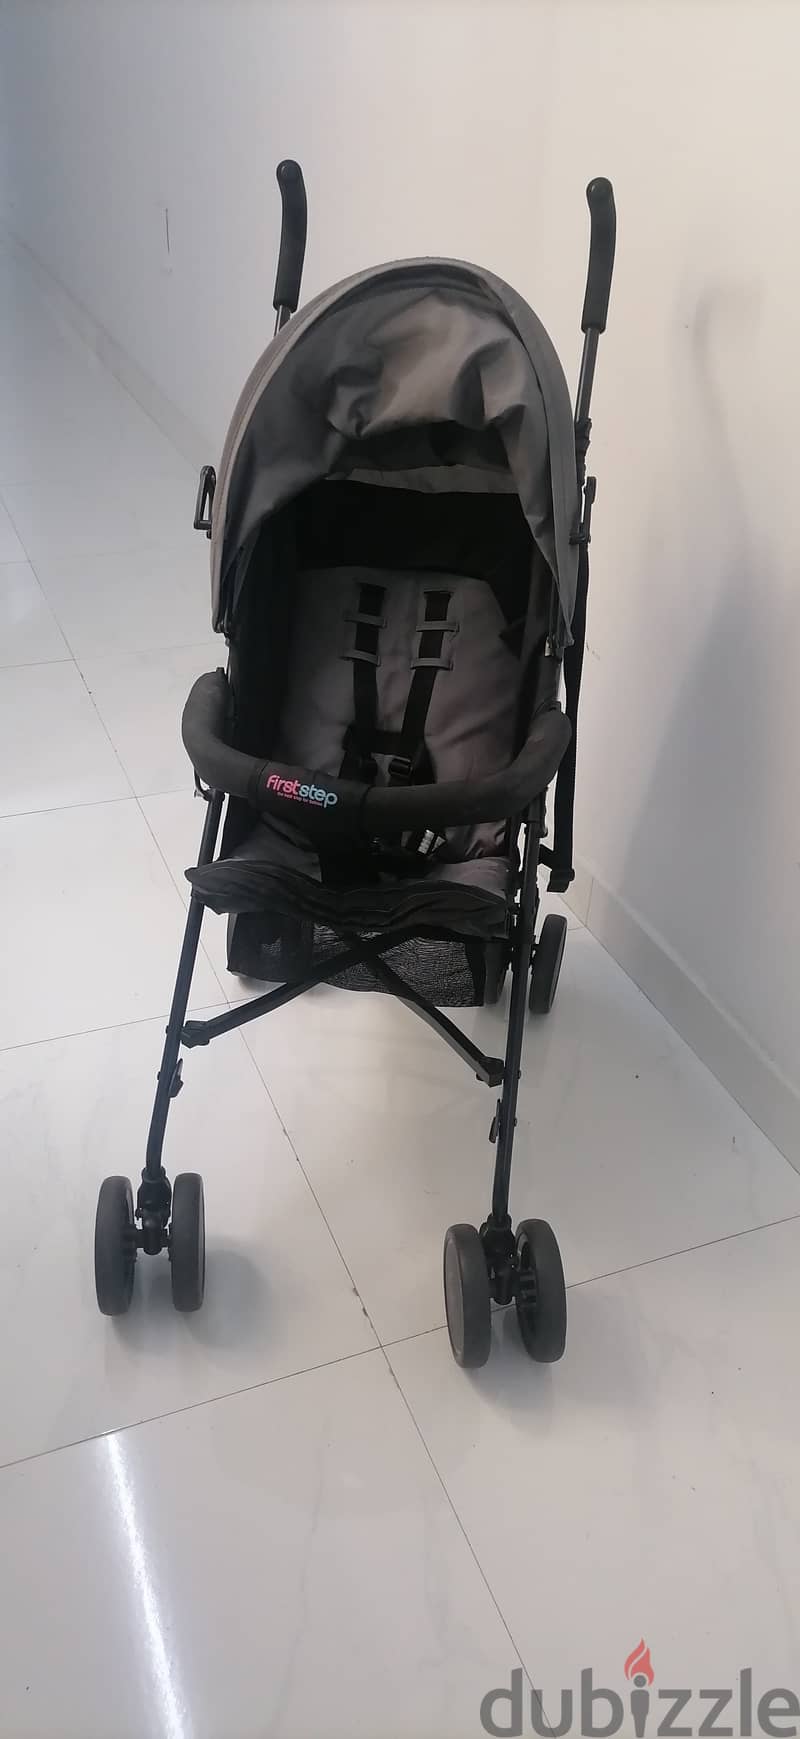 Branded baby stroller 1